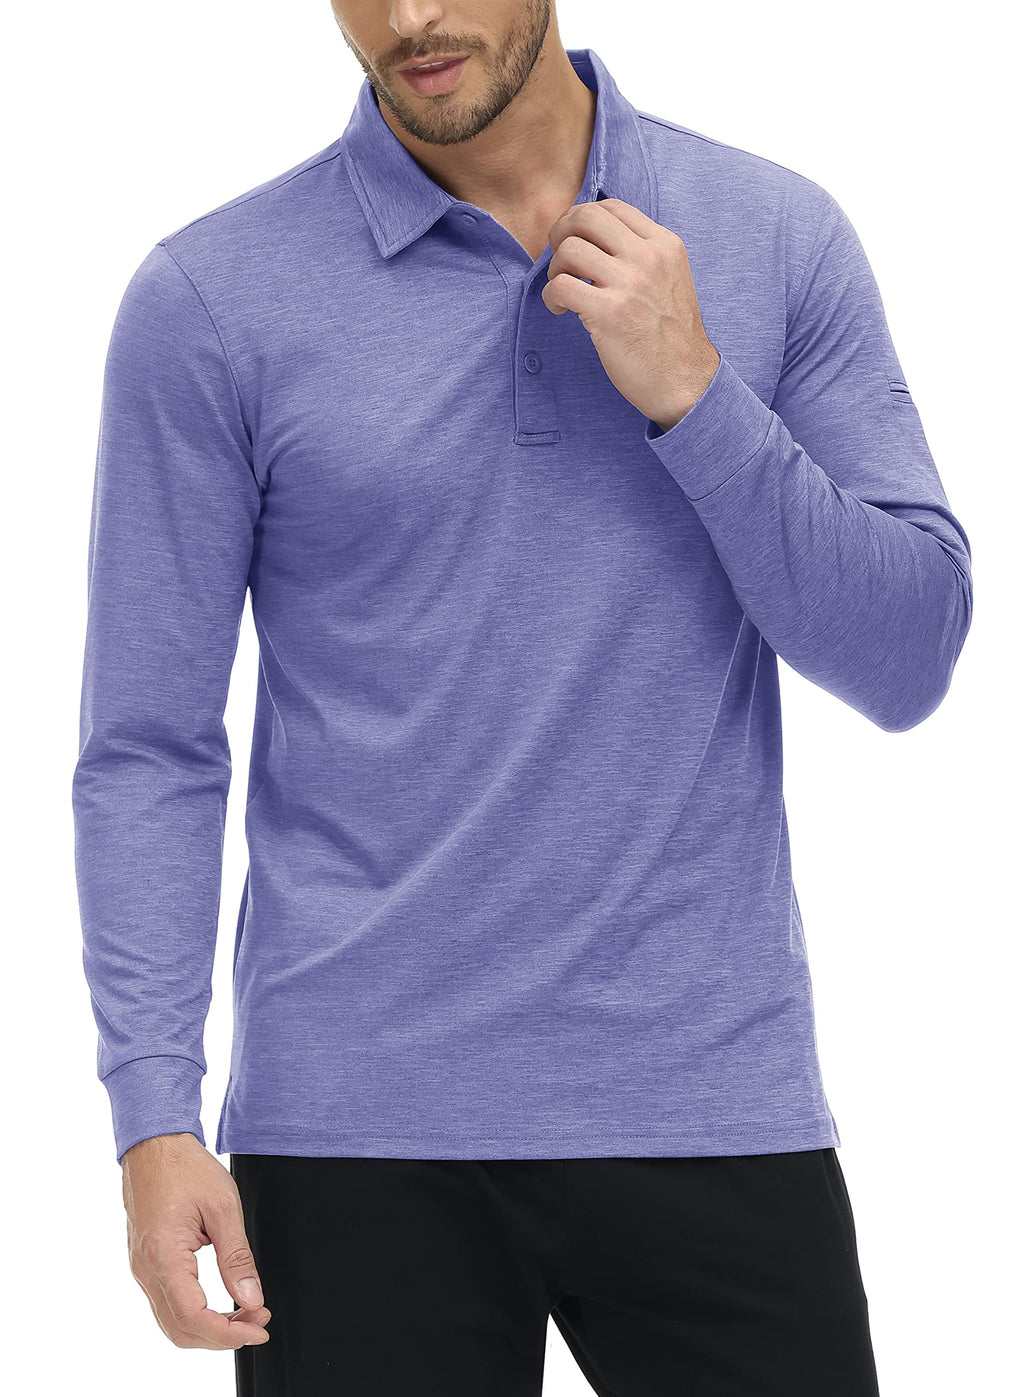 Soft Polyester Golf Polo Long Sleeve Shirt model shot purple